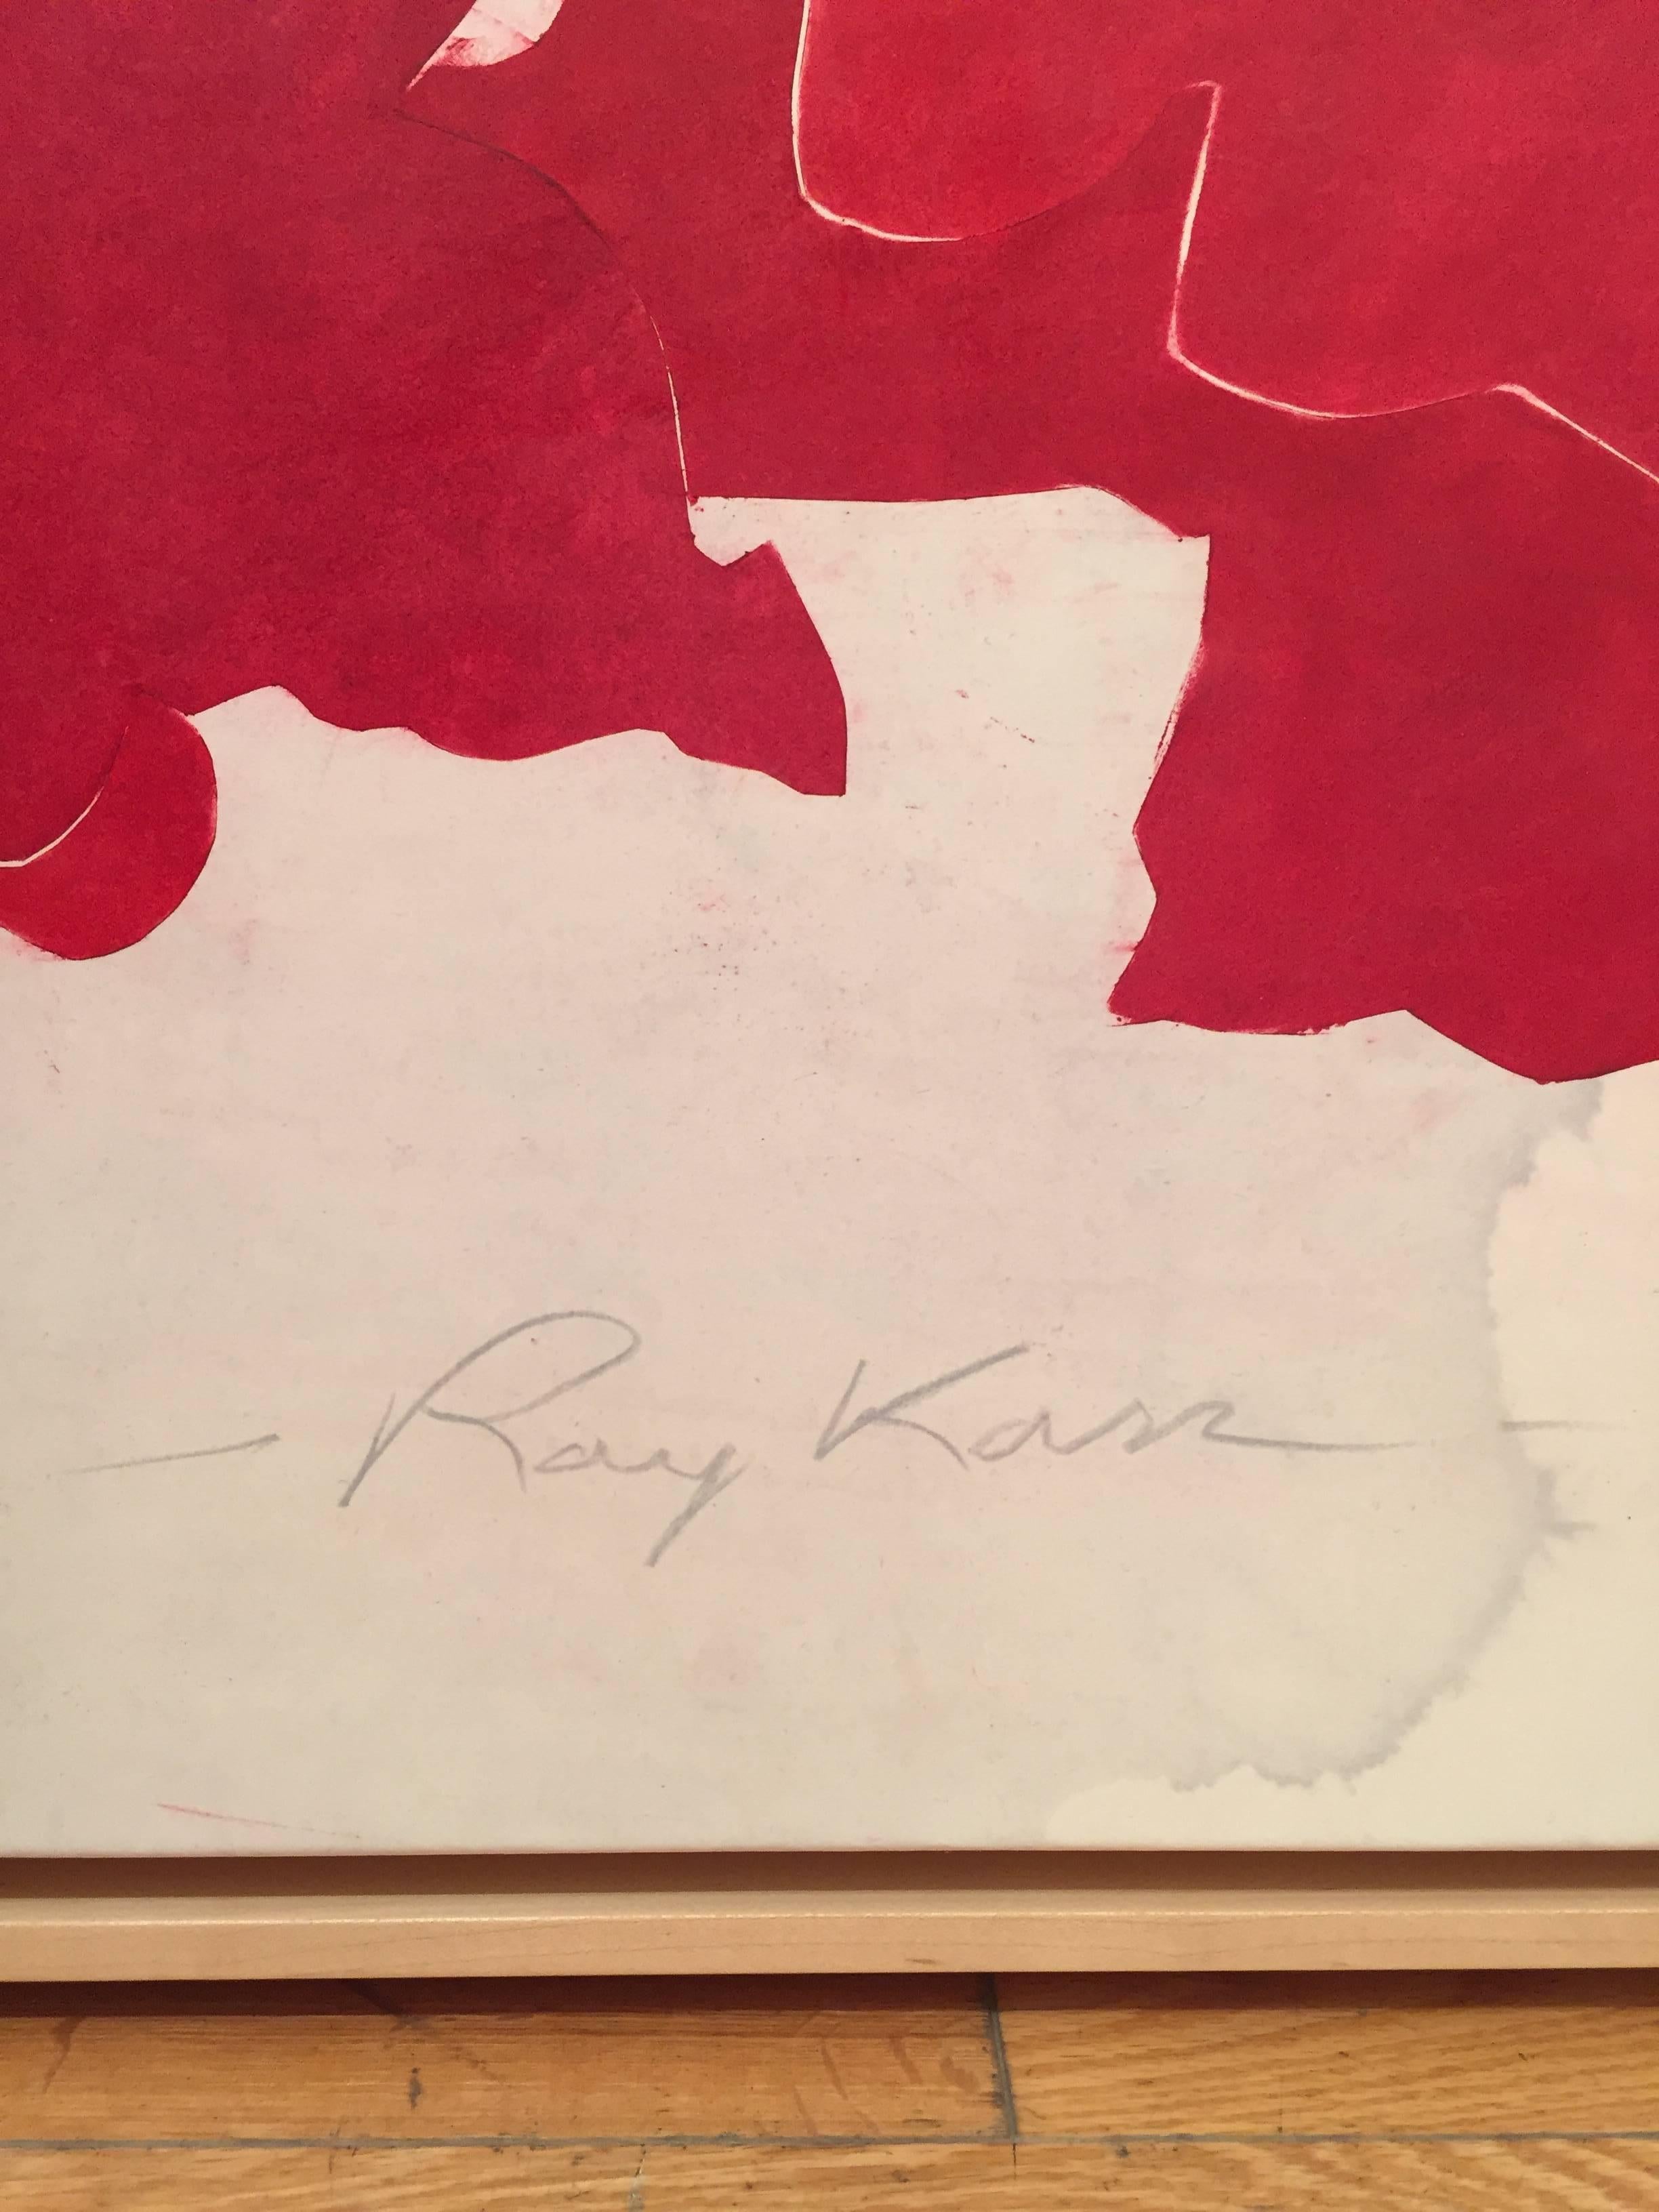 Ray Kass, Still Life 5-16-2015, abstract mixed media watercolor painting, 2015 3